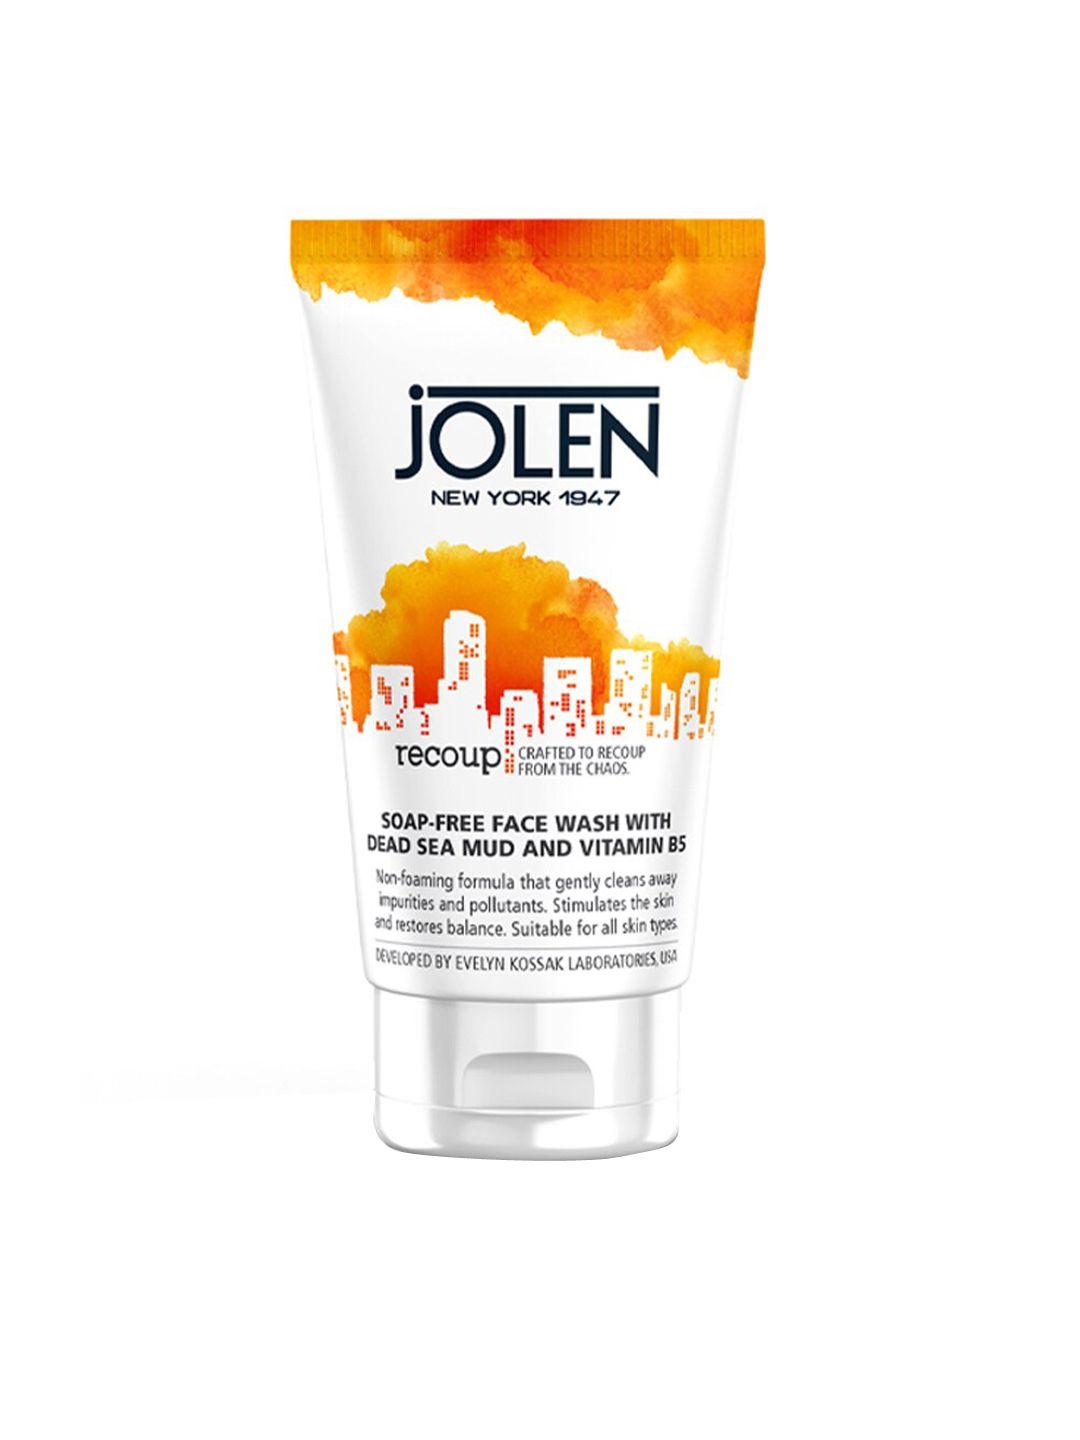 jolen new york recoup dead sea mud and vitamin b5 soap-free face wash - 125ml